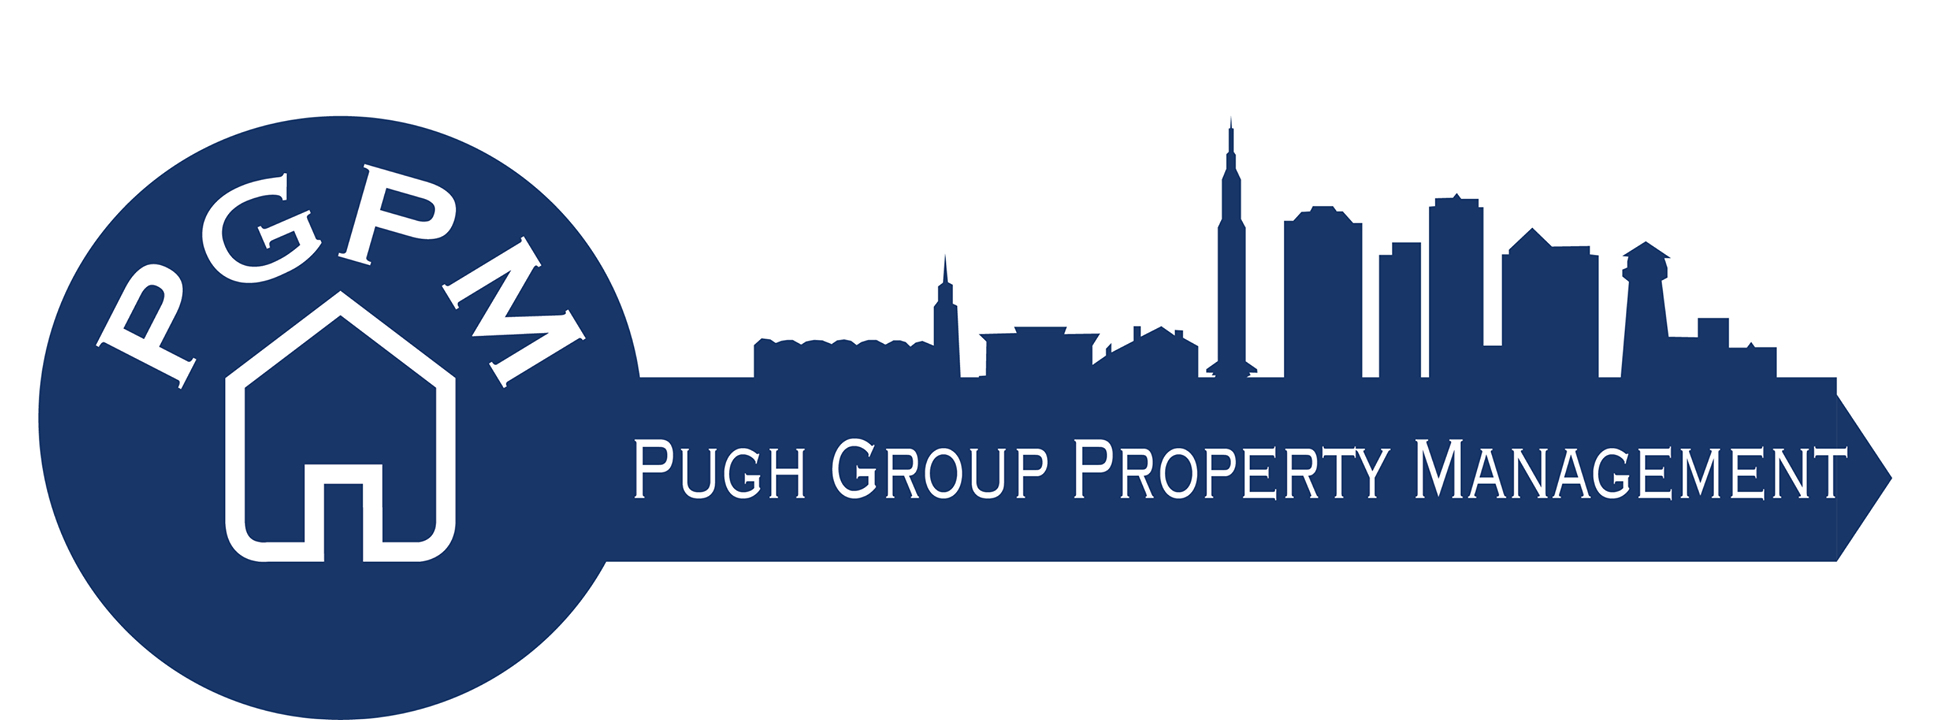 The Pugh Group Property Management, LLC